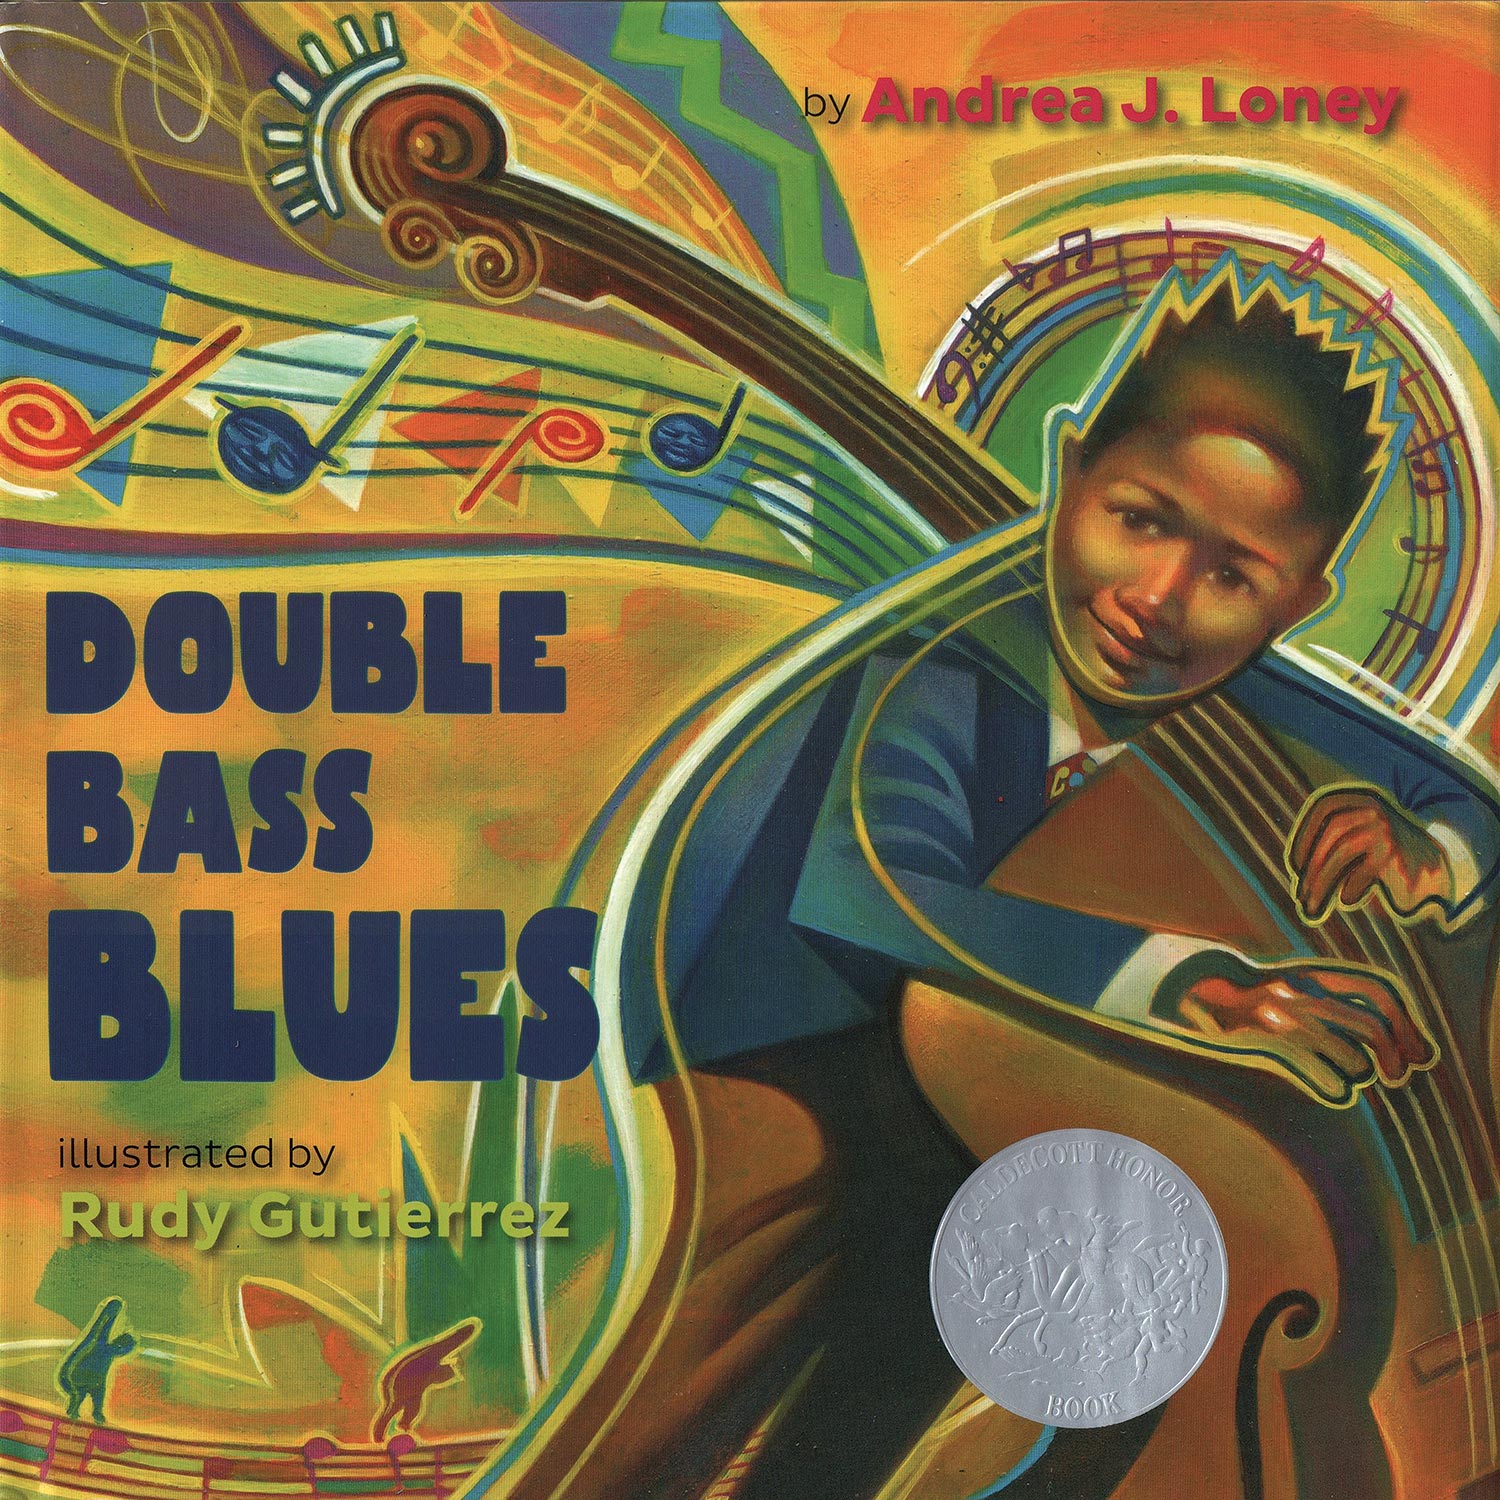 Blues Bass book. Лоуни книга. Бас английский.